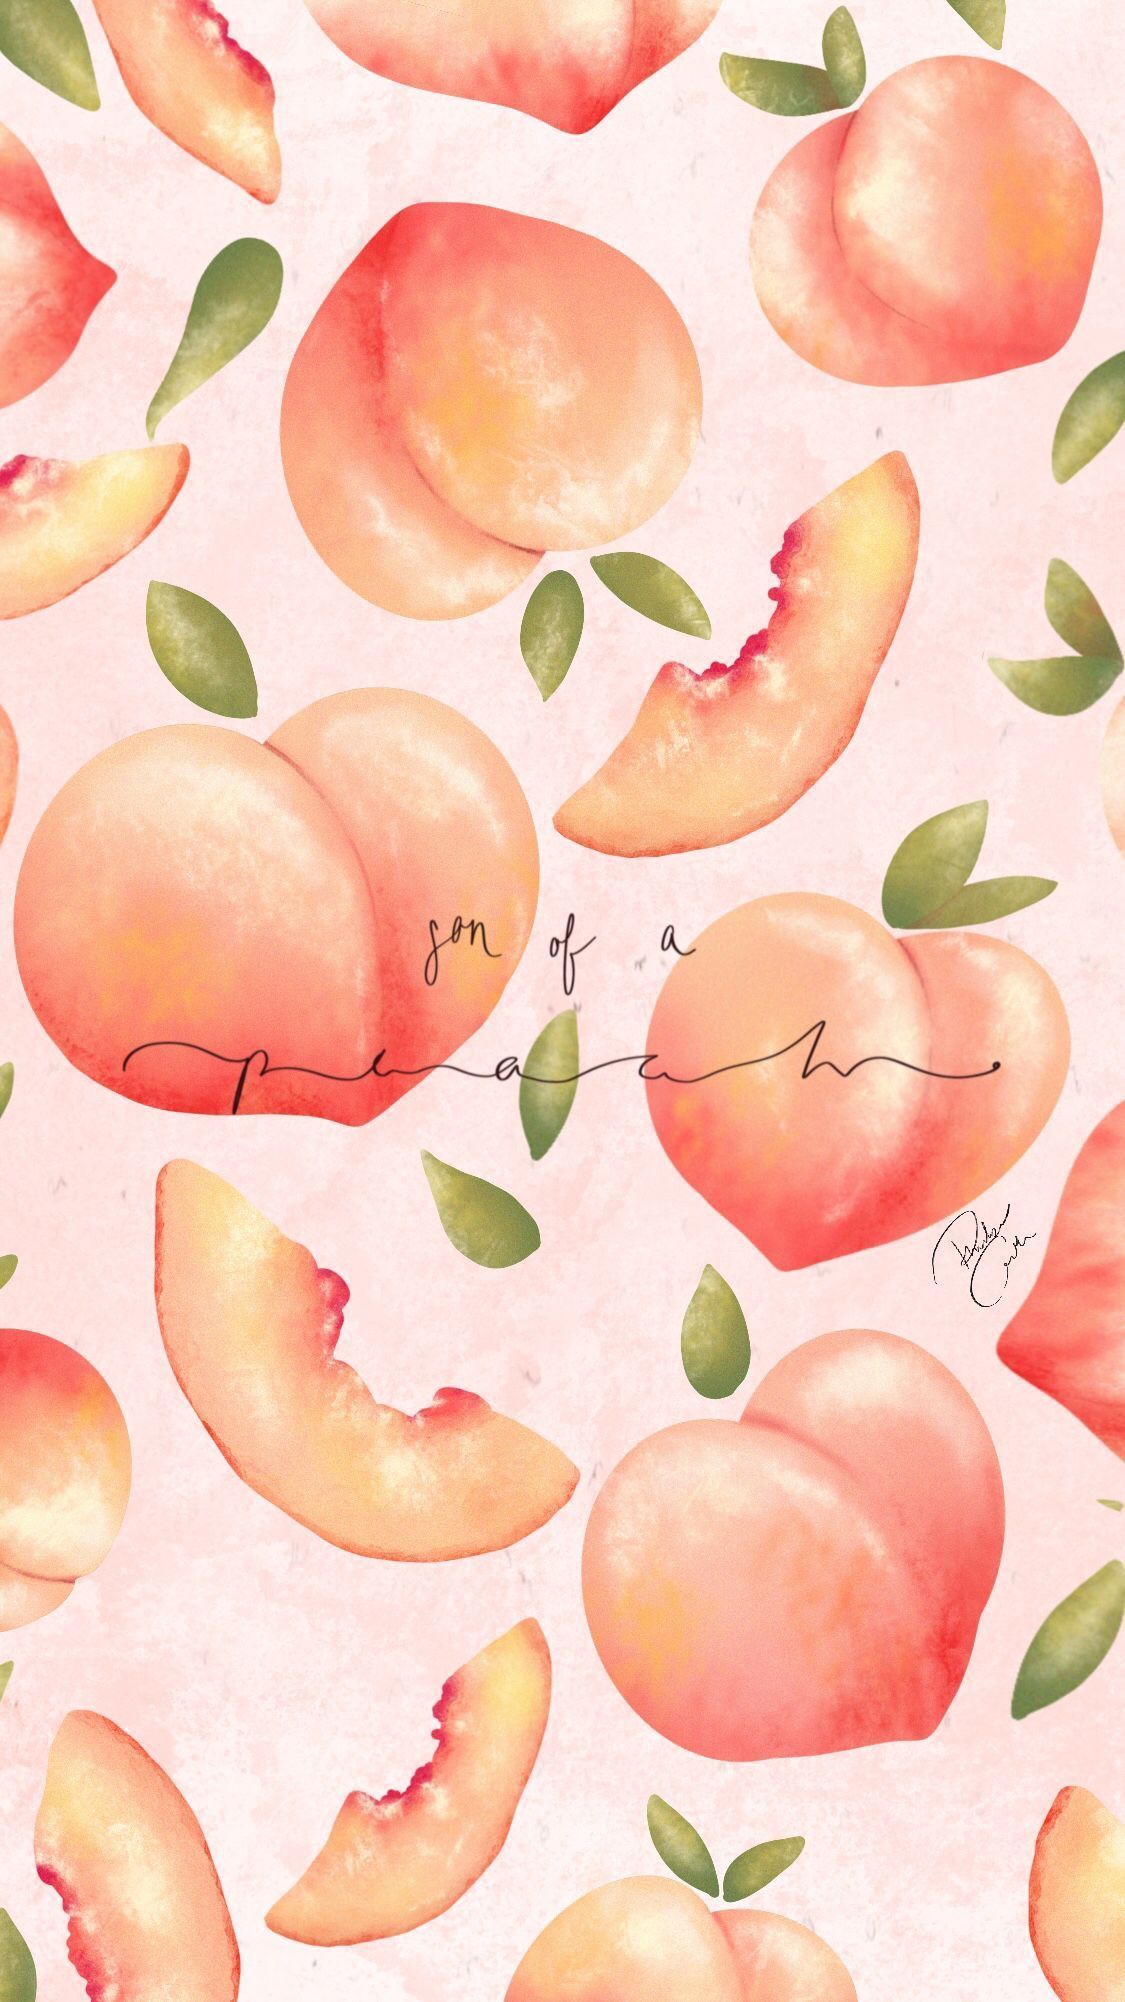 Fruit wallpaper .com